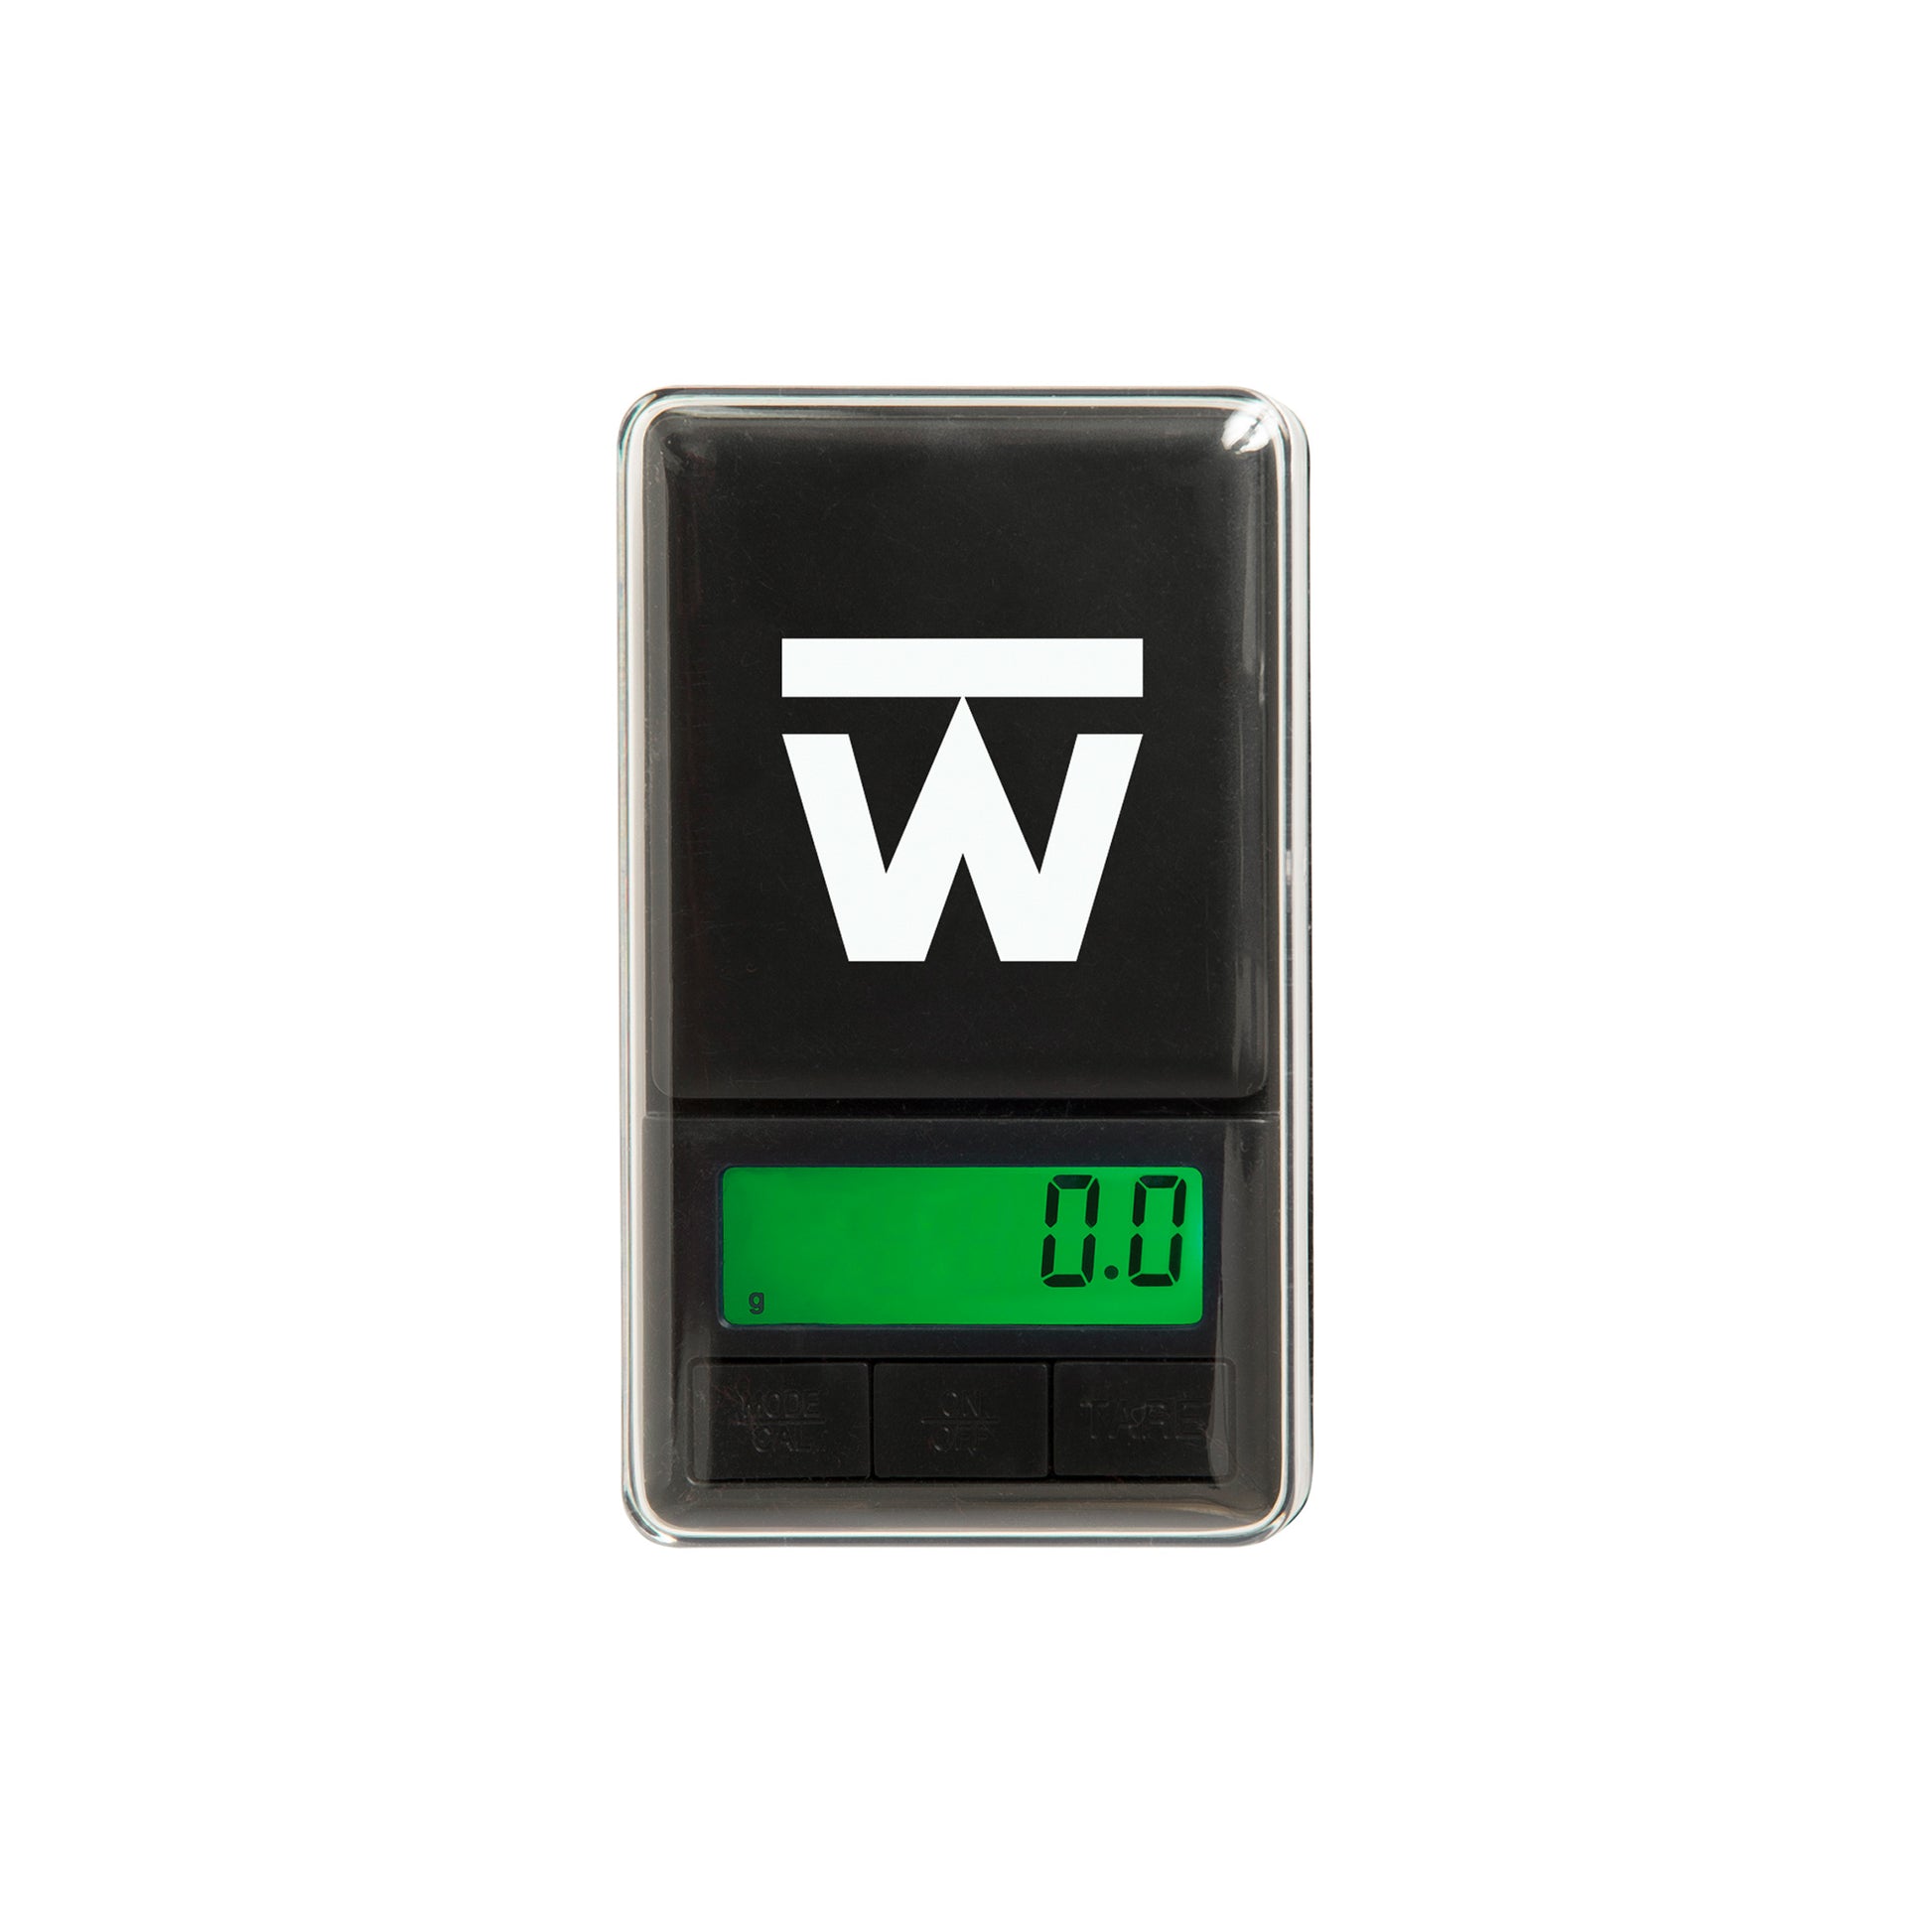 Truweigh APEX Digital Mini Scale - 1000g x 0.1g - Black Portable Scale